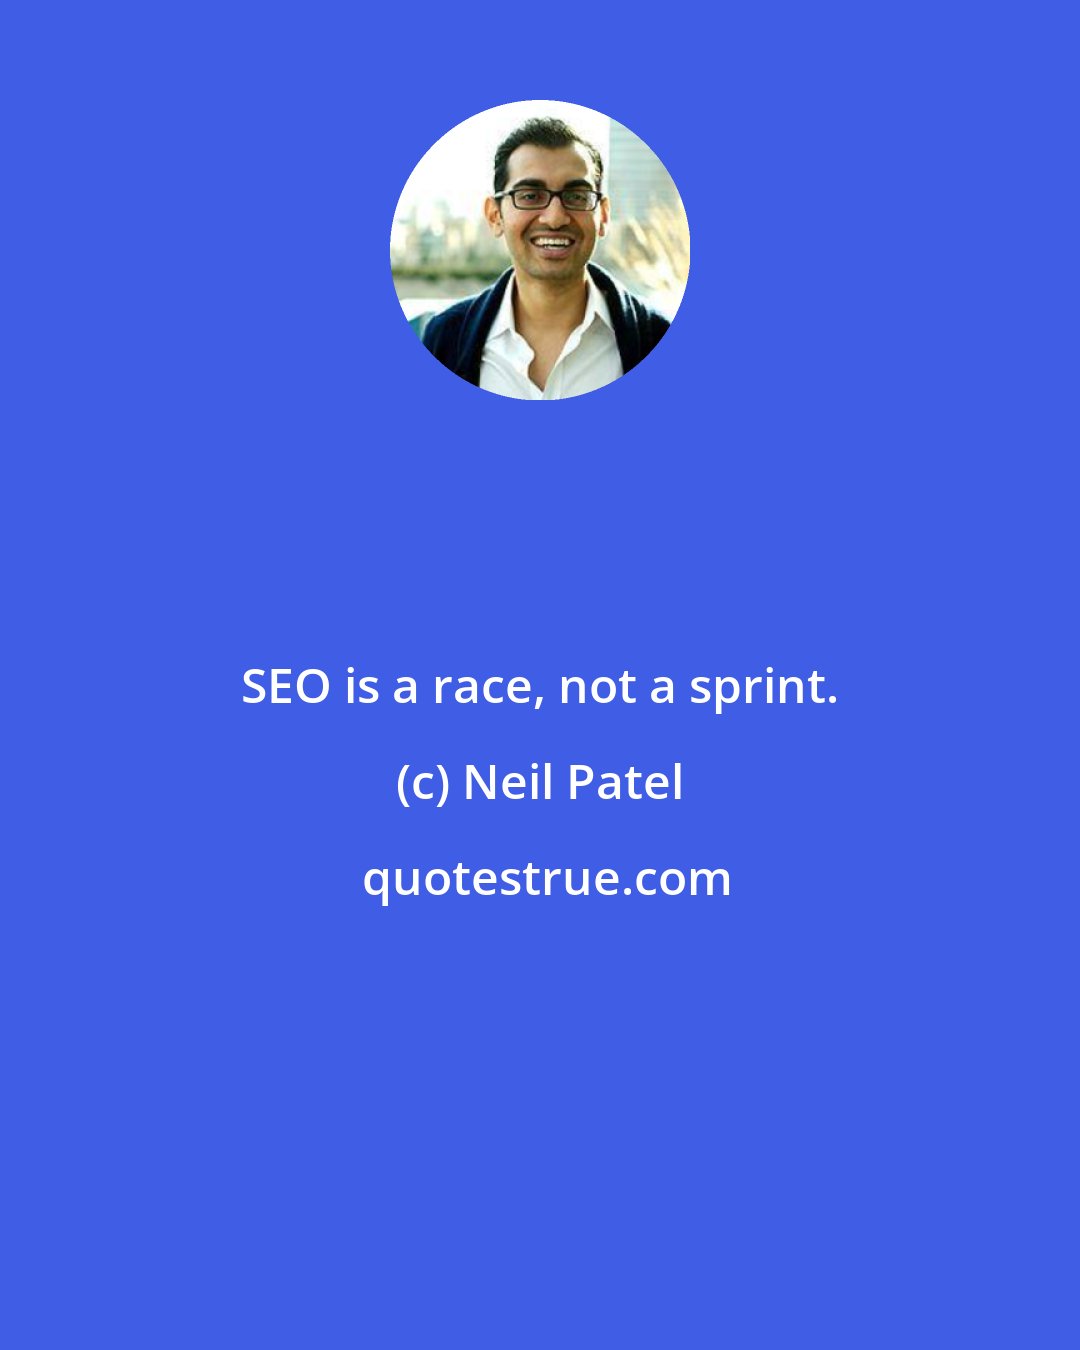 Neil Patel: SEO is a race, not a sprint.